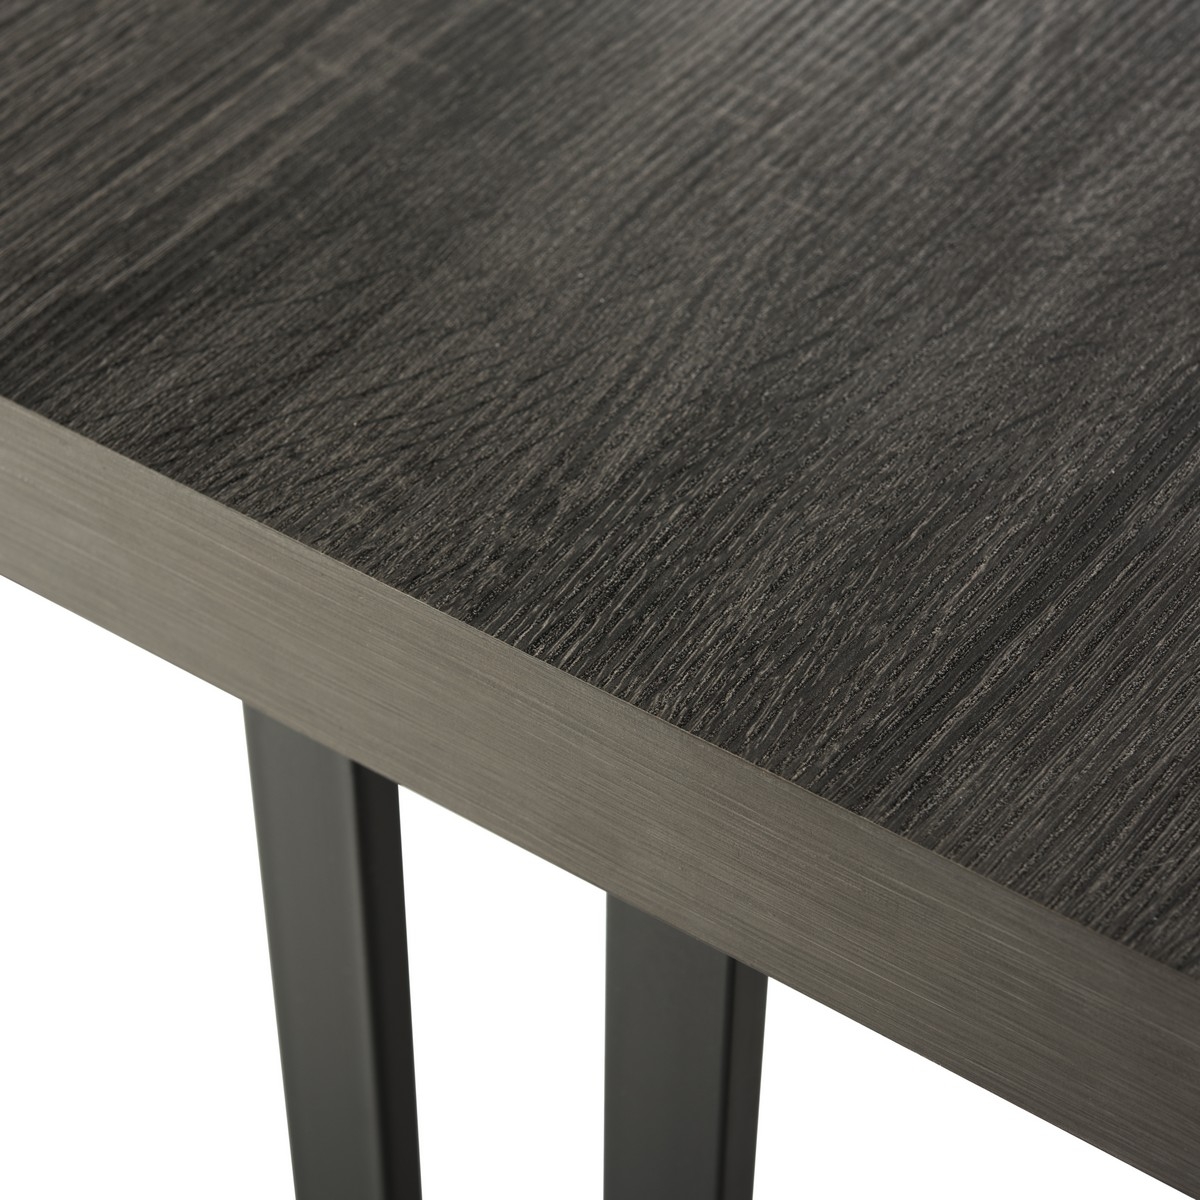 Amalya Modern Mid Century Wood Coffee Table - Dark Grey/Black - Safavieh - Image 4